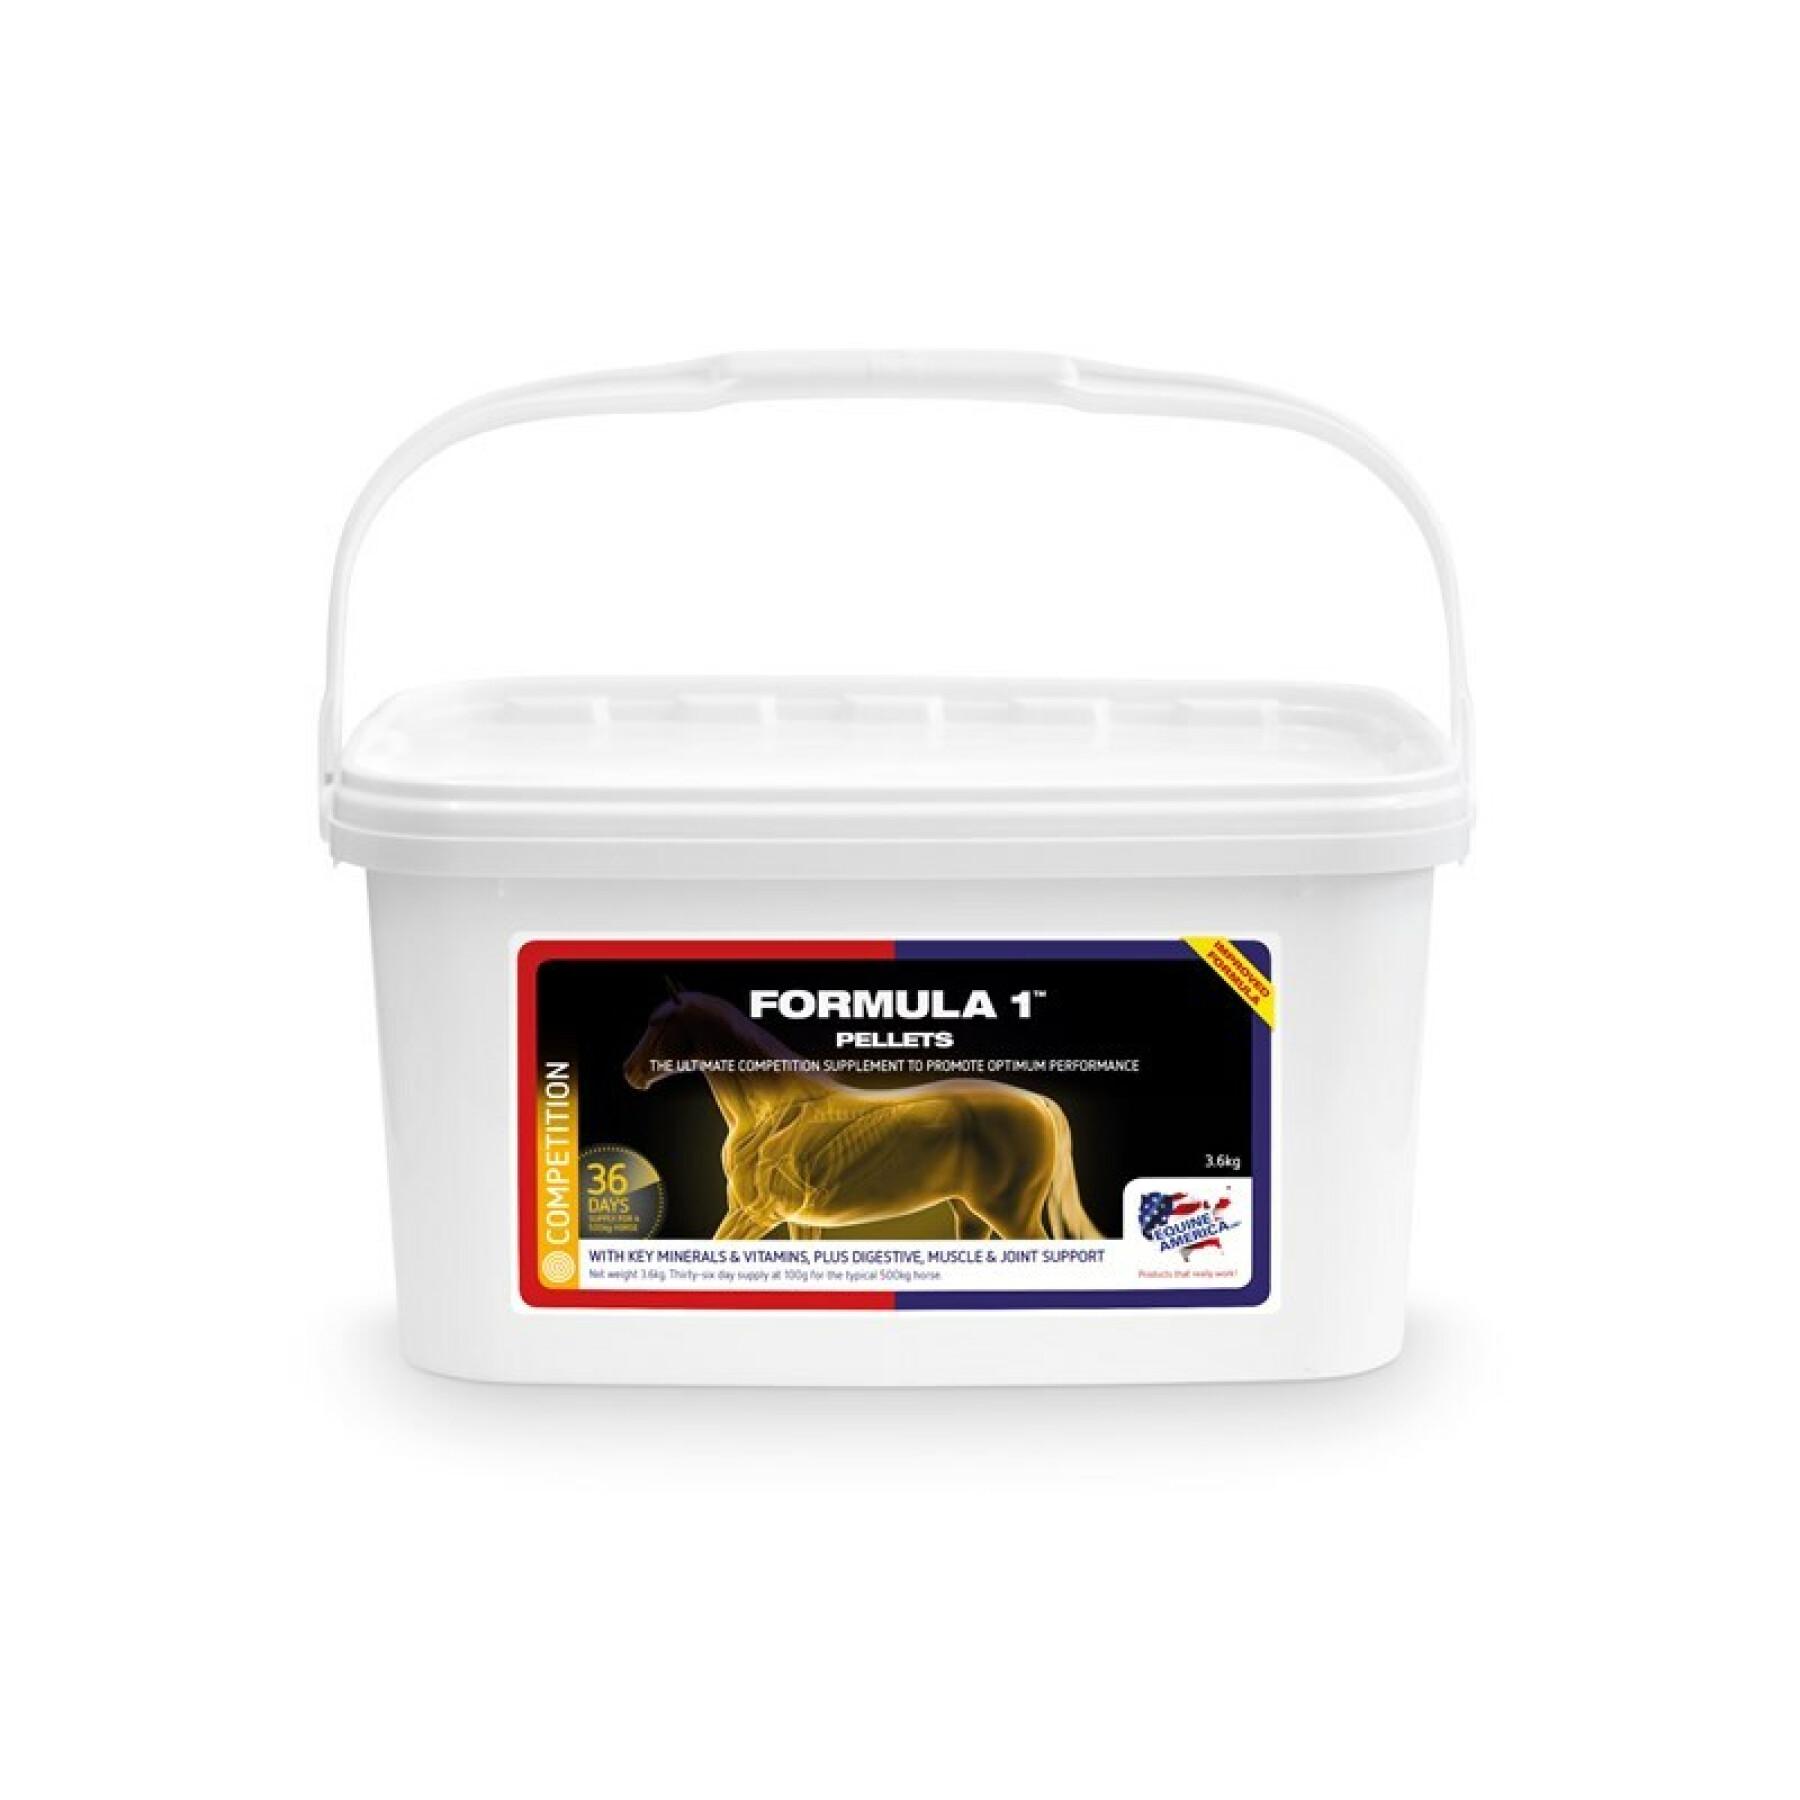 Food supplement for horses Equine America Formula 1